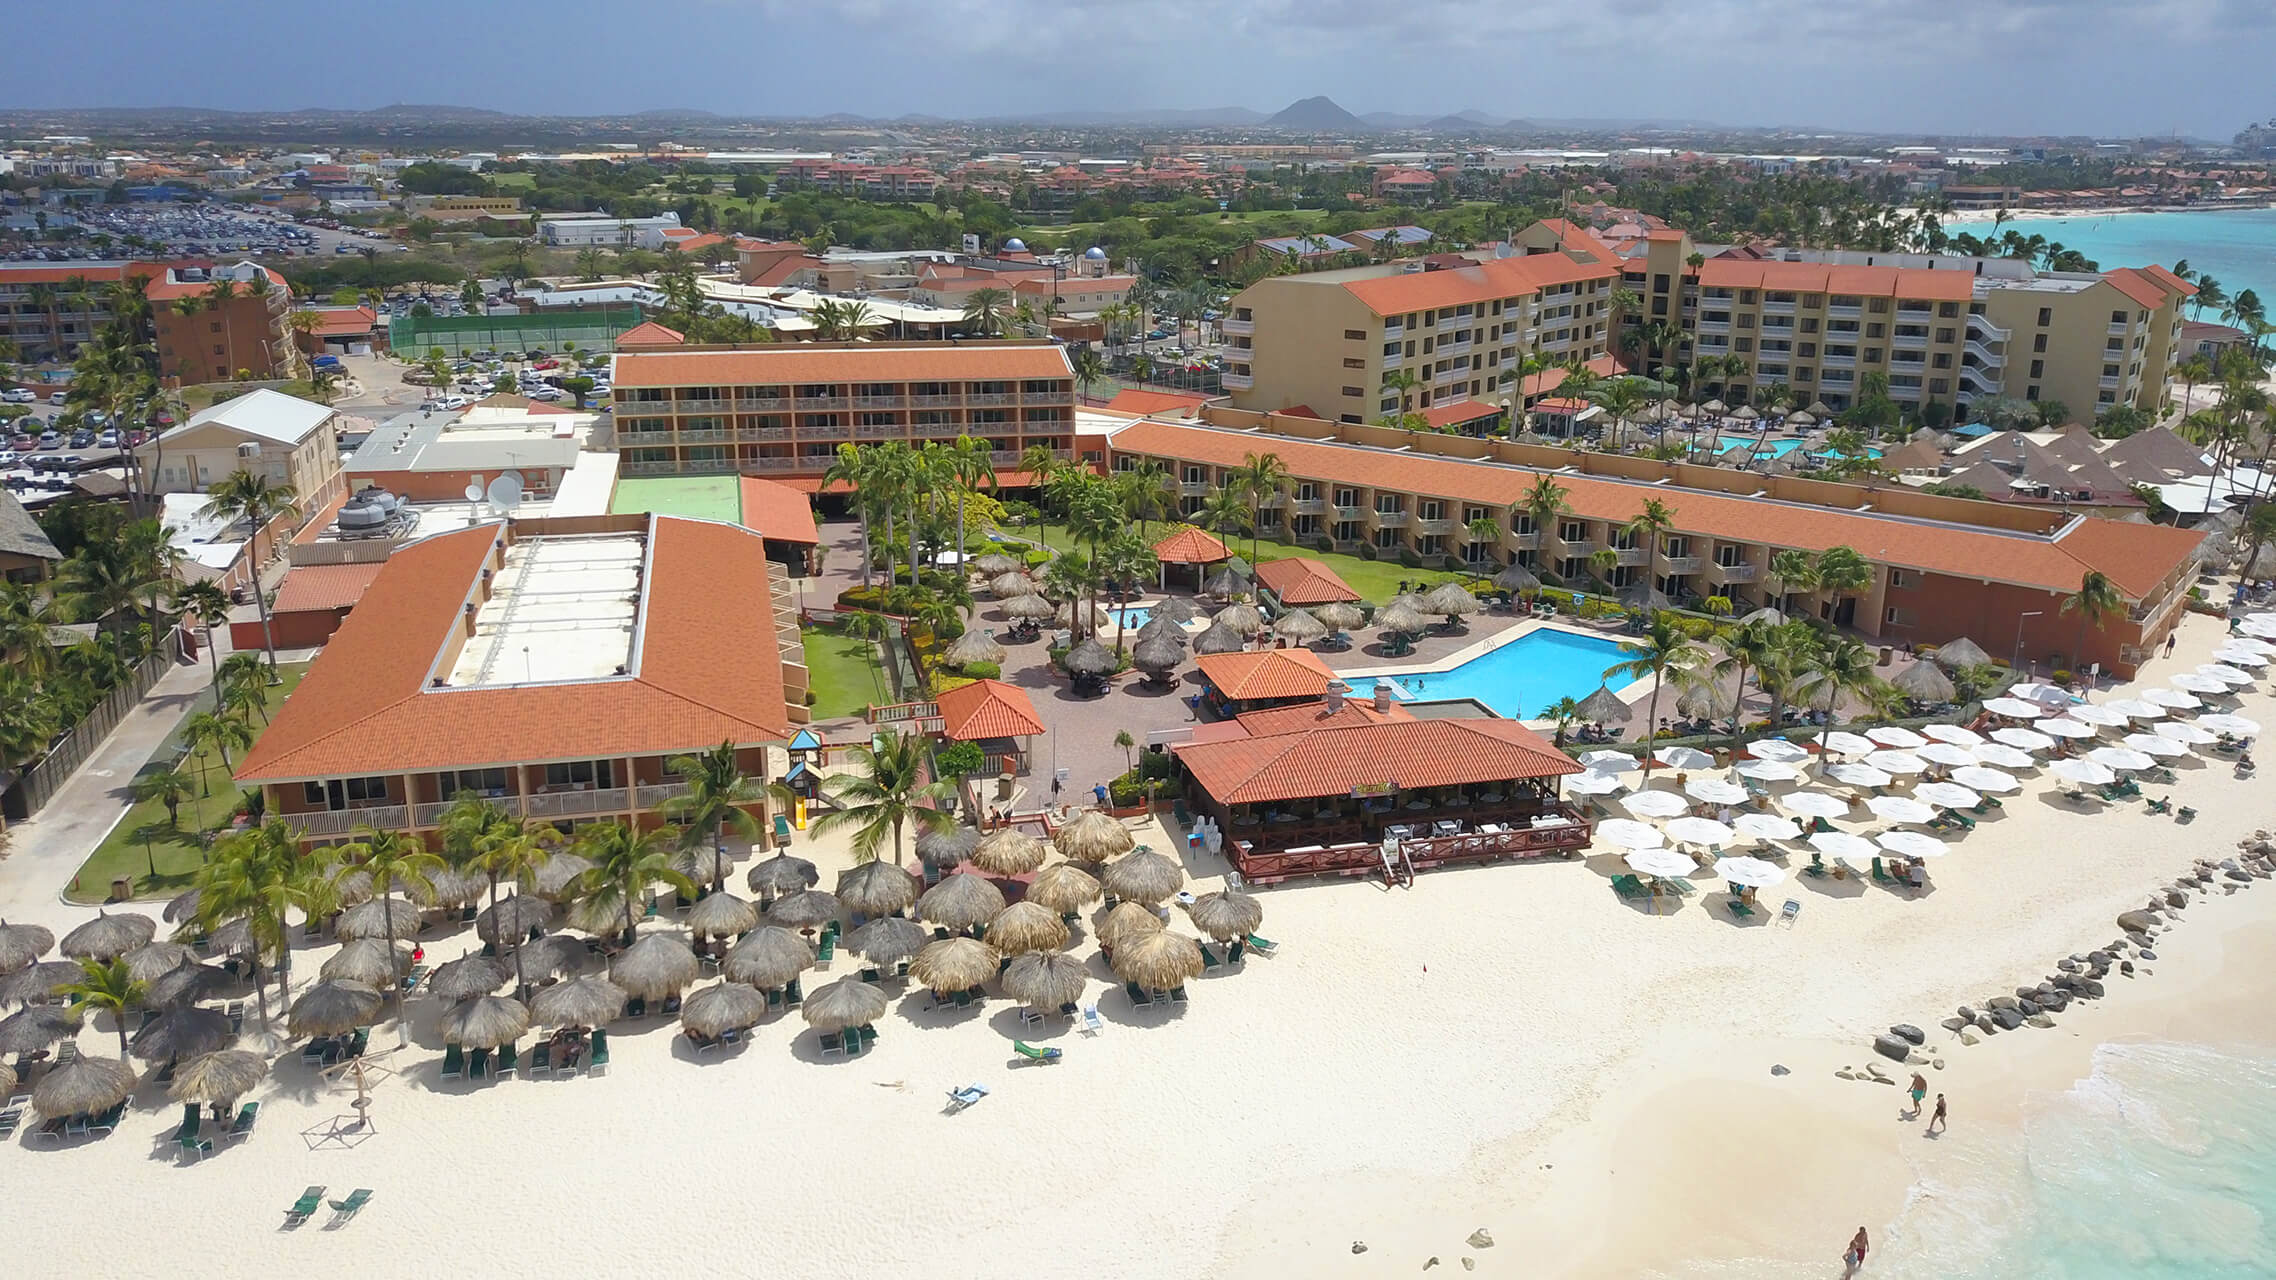 About Beach Club Resort - The Aruba Beach Club Resort